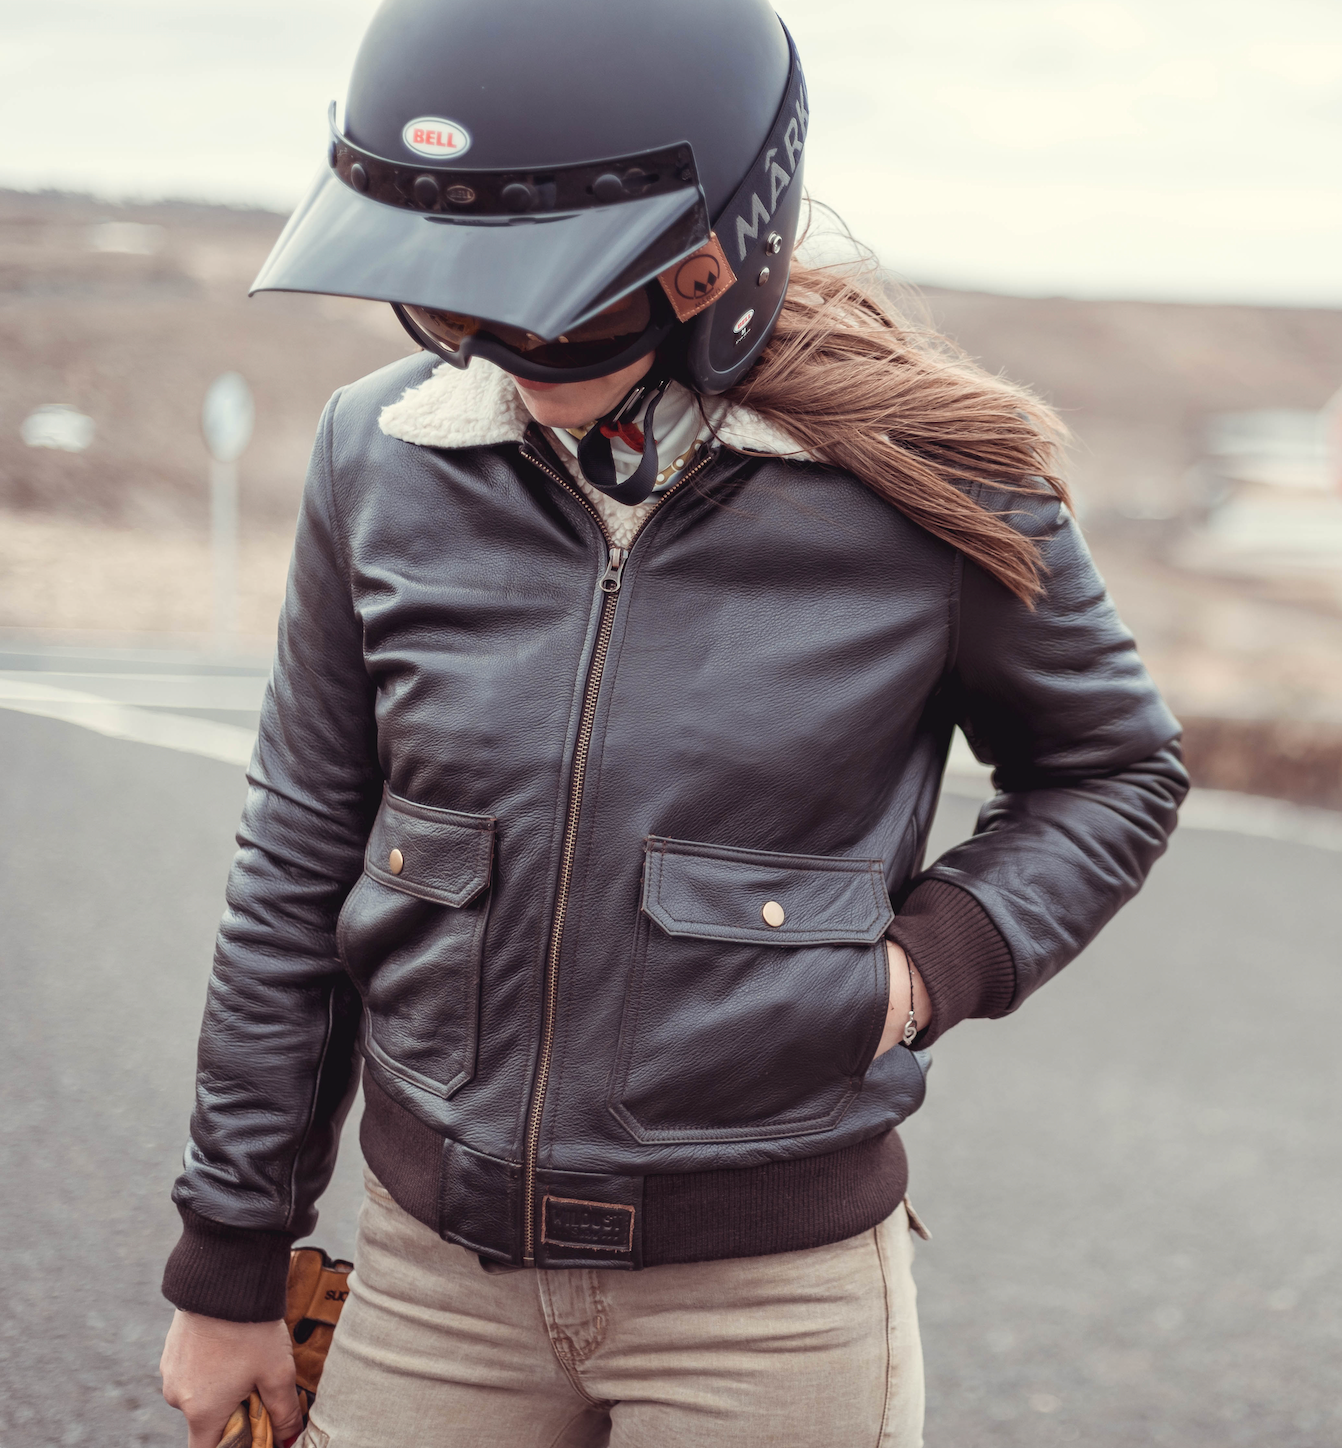 woman motorcyclists wearing brown aviator style jacket